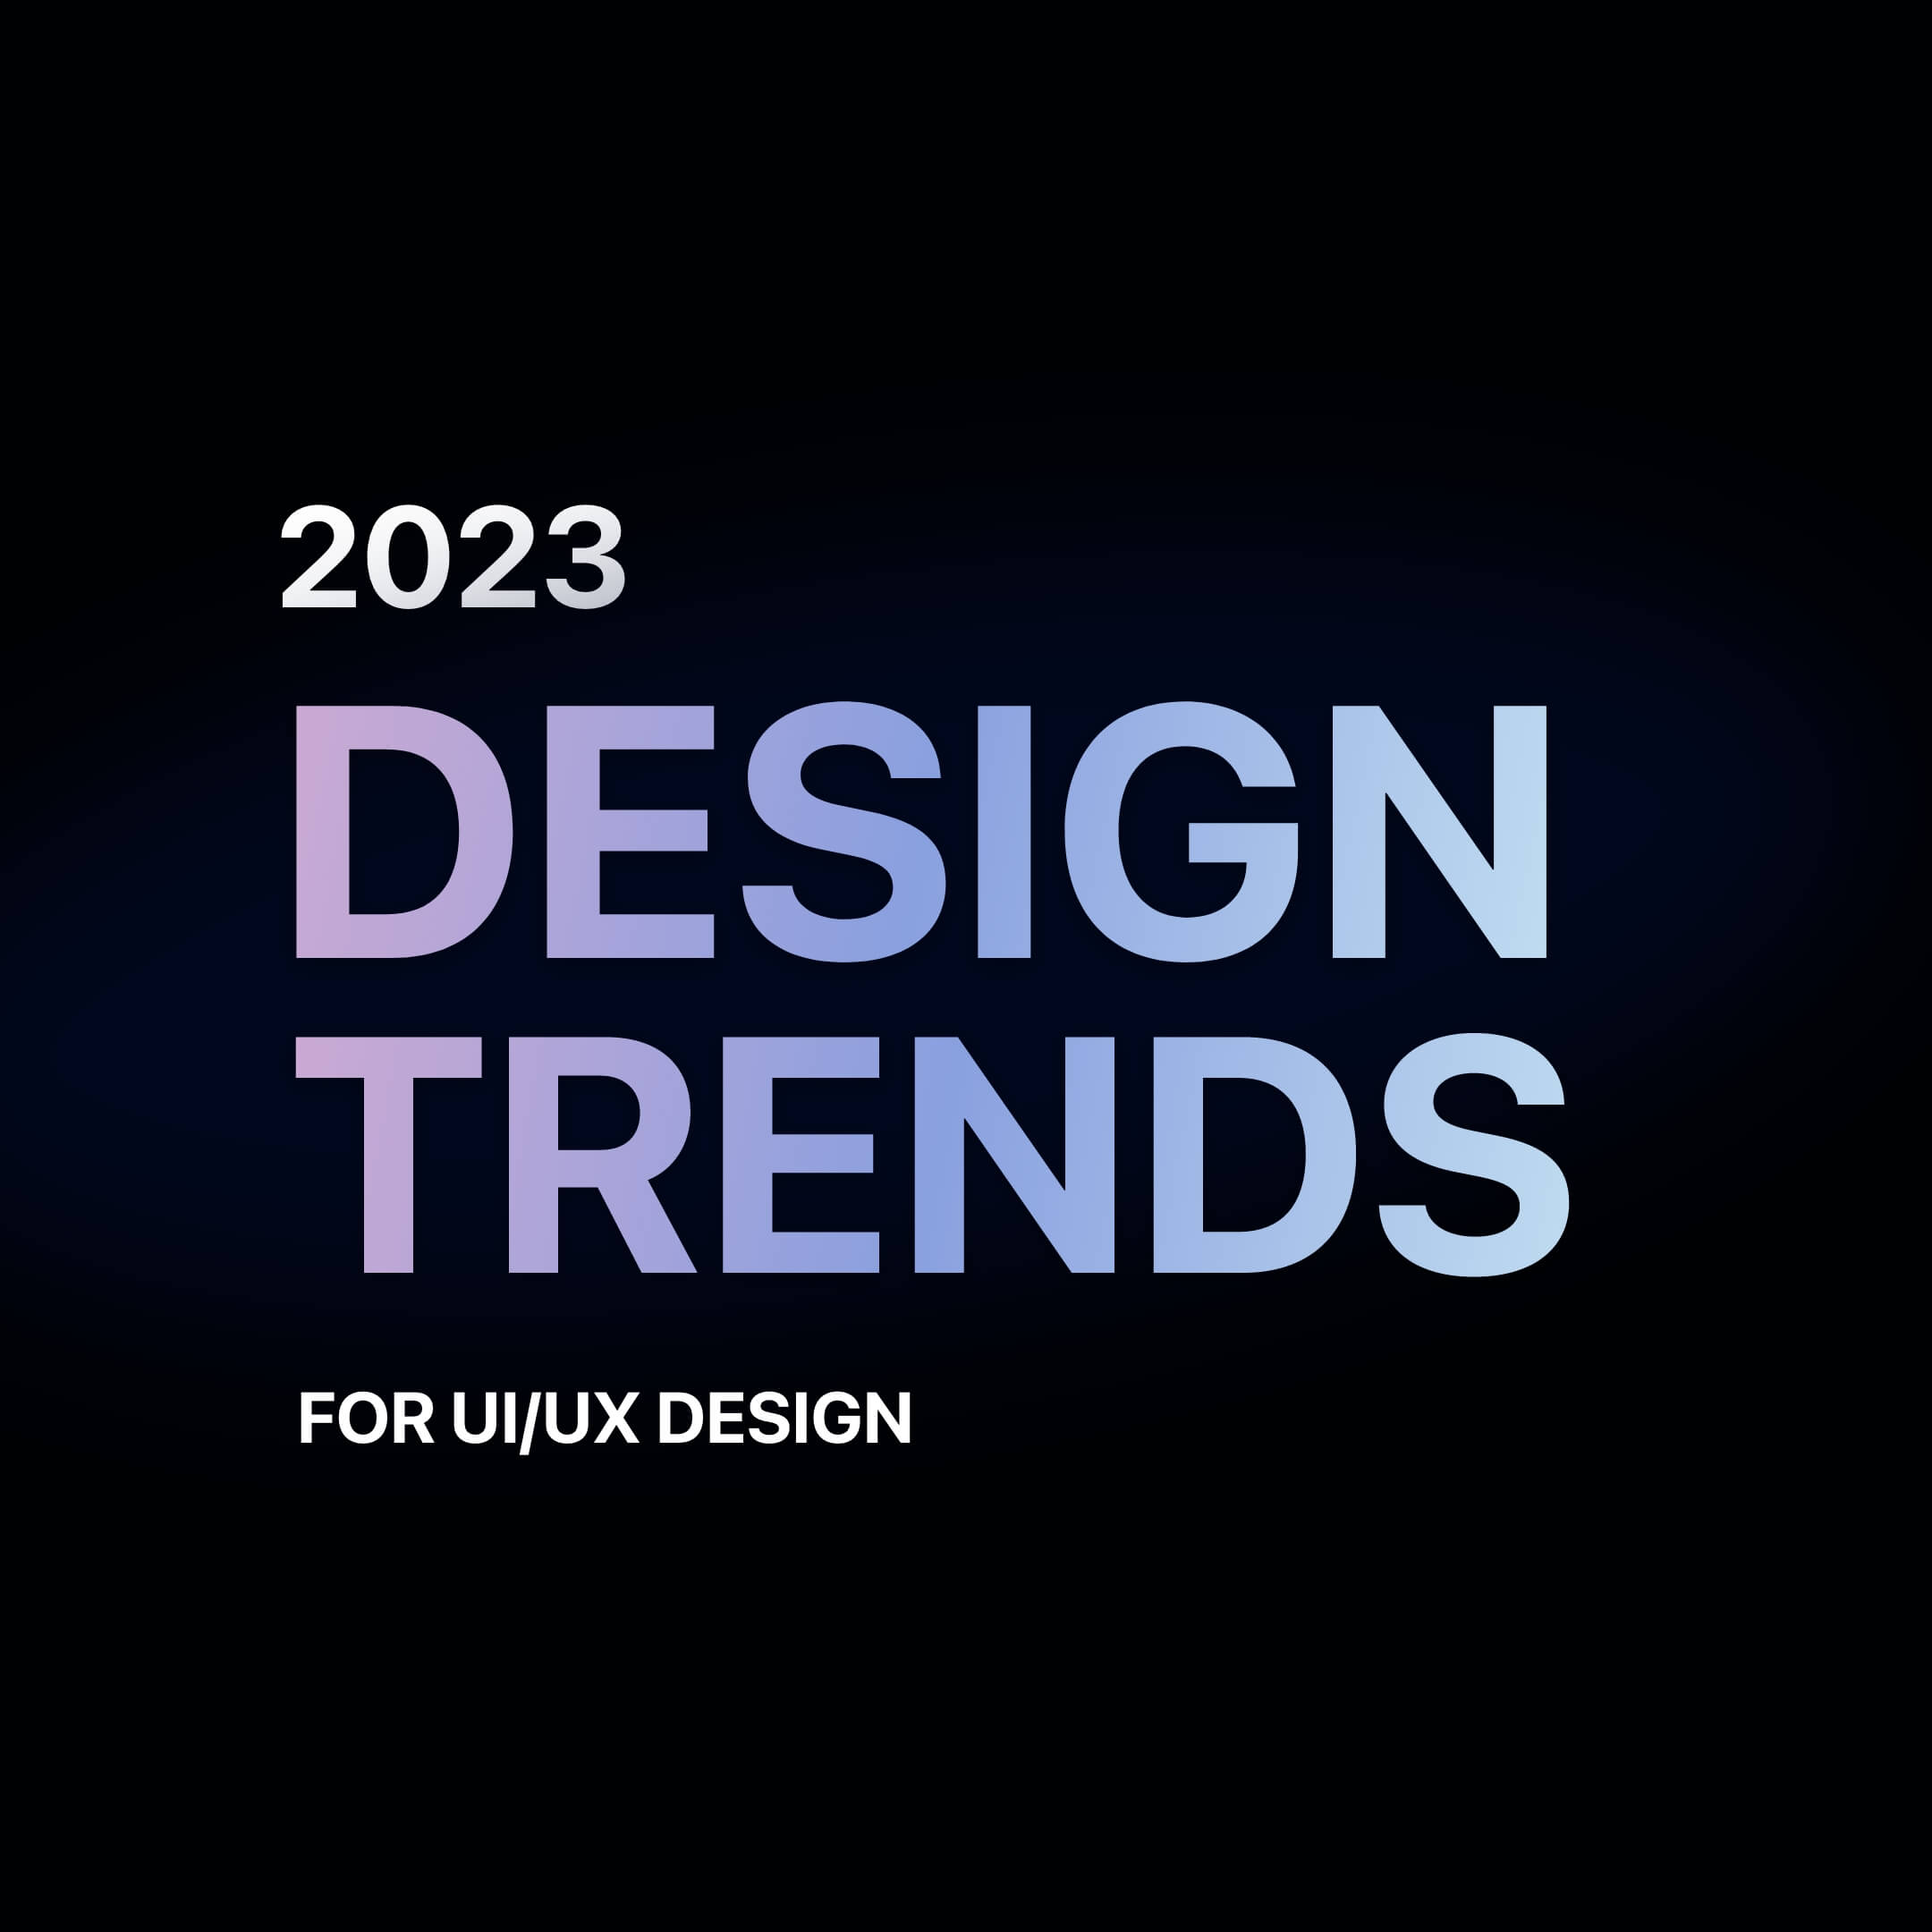 2023 design trends for ui/ux